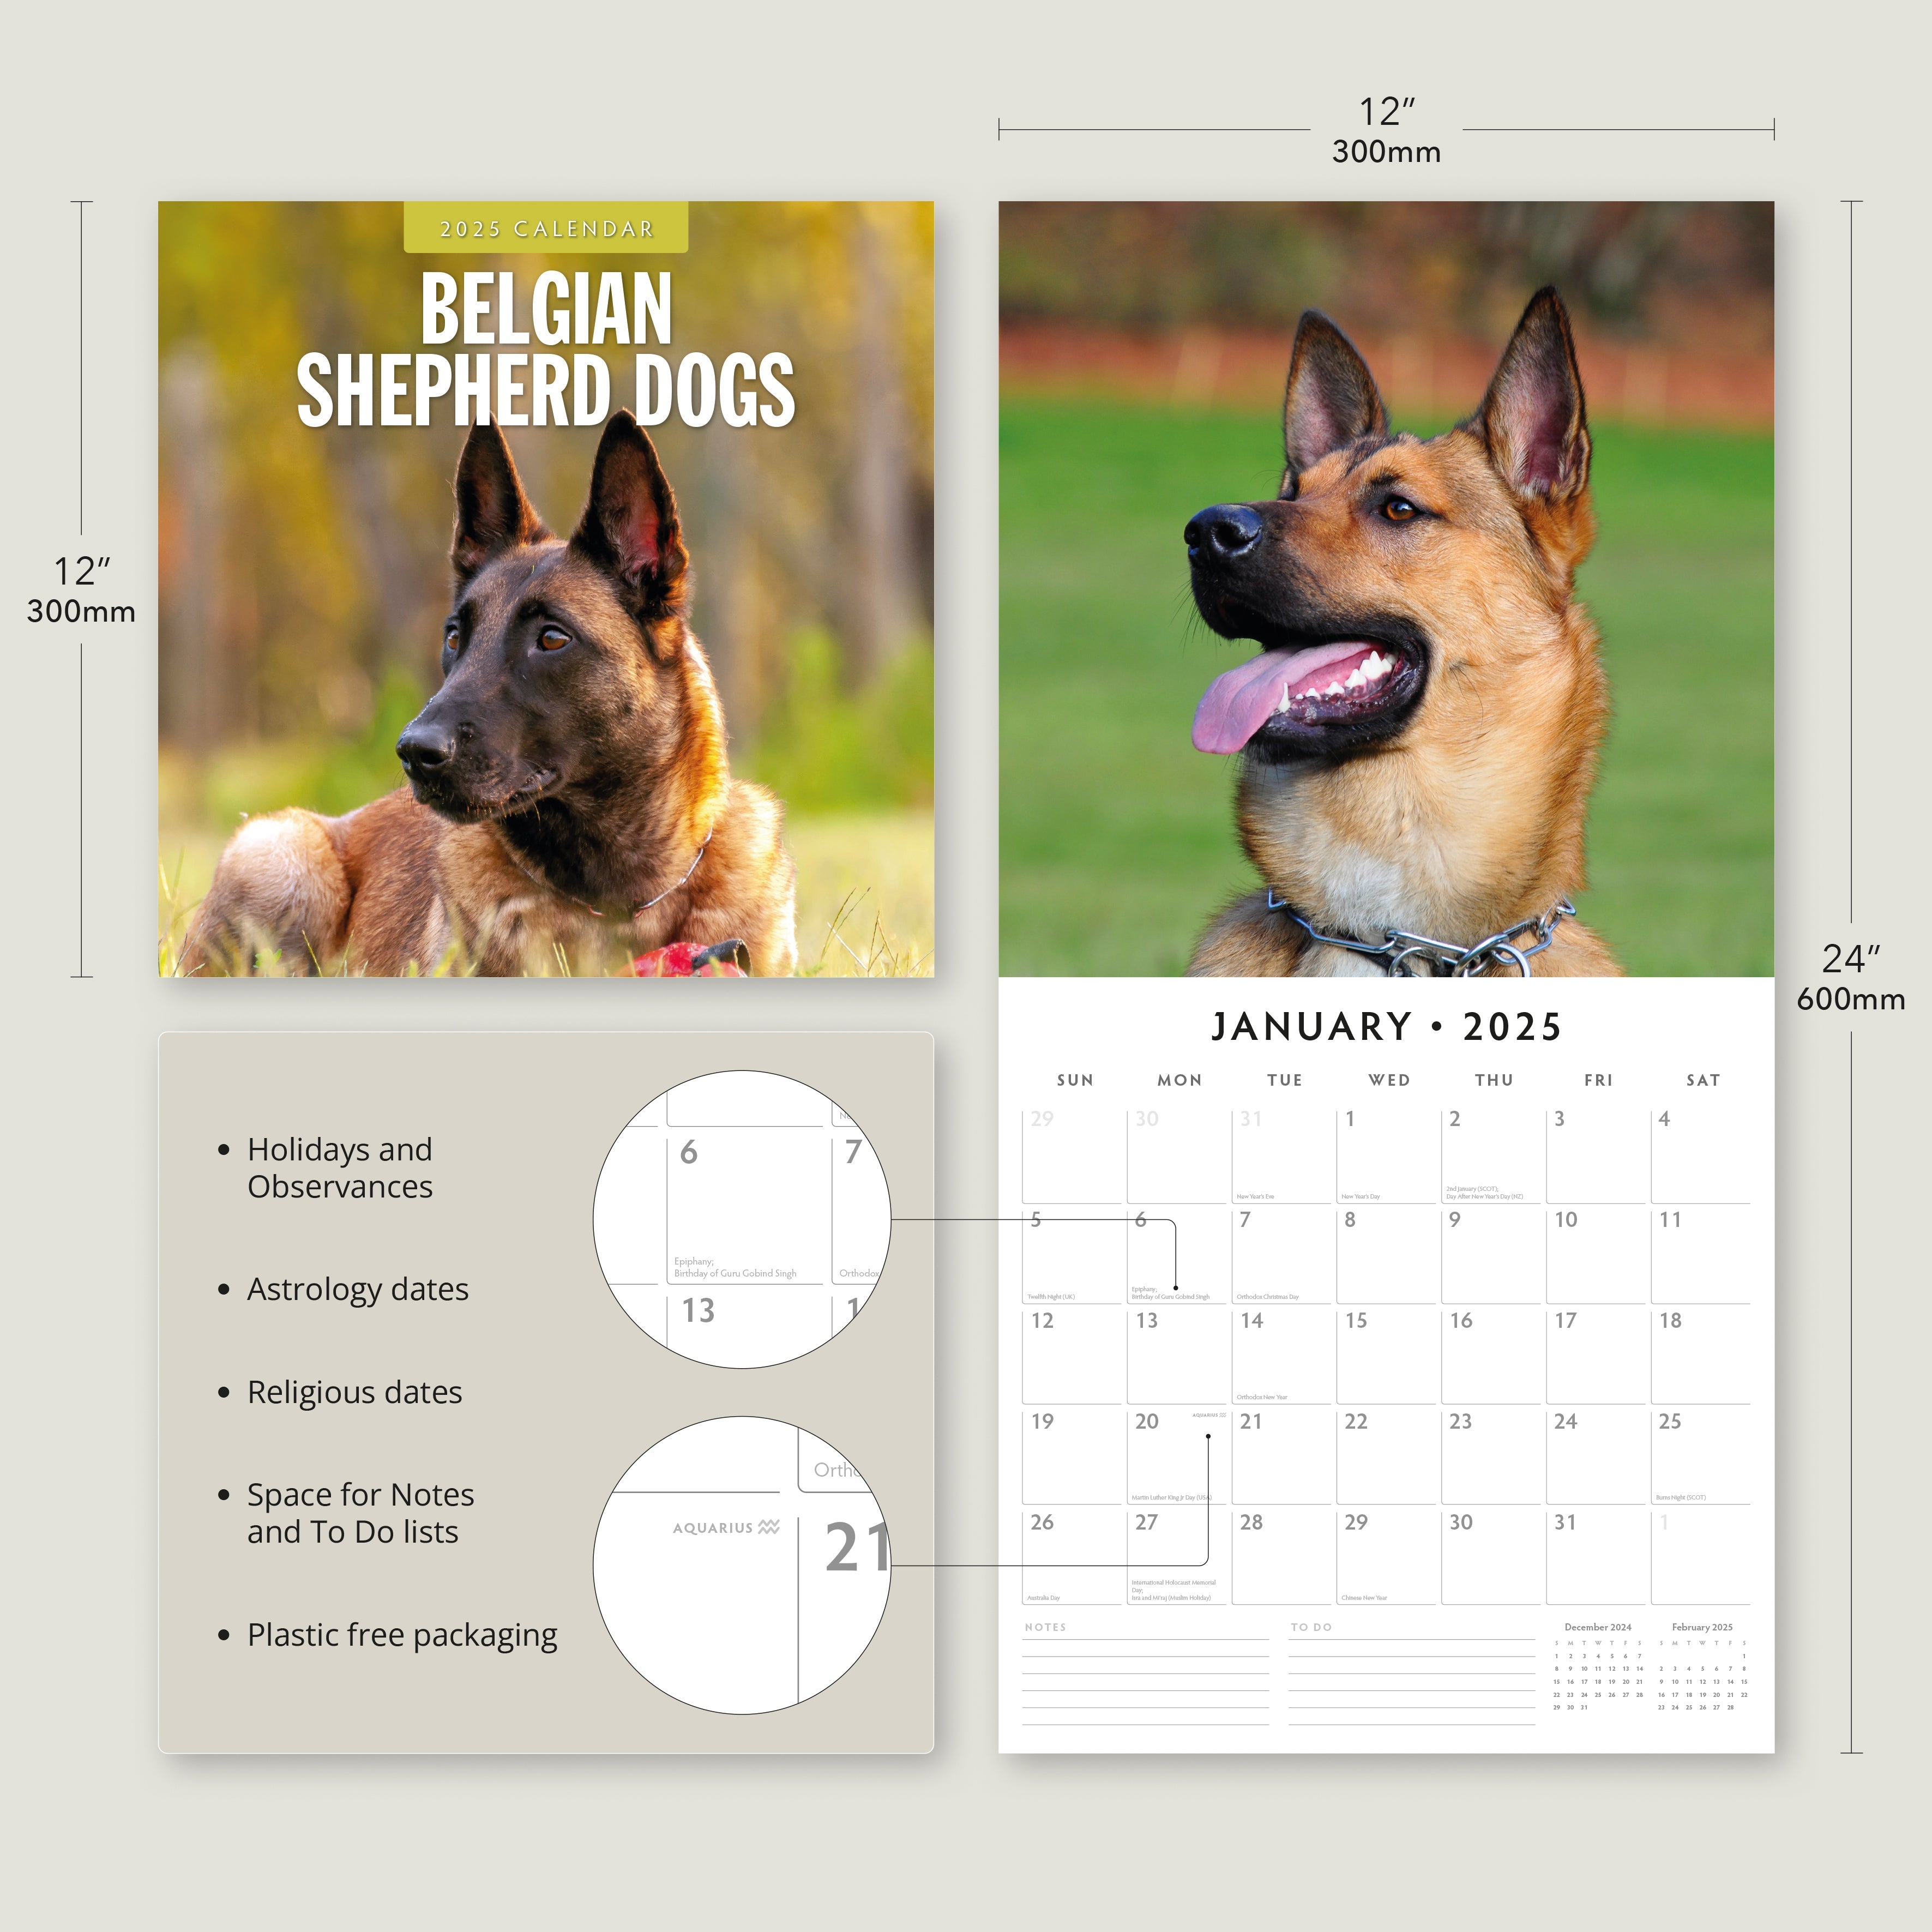 2025 Belgian Shepherd Dogs - Square Wall Calendar